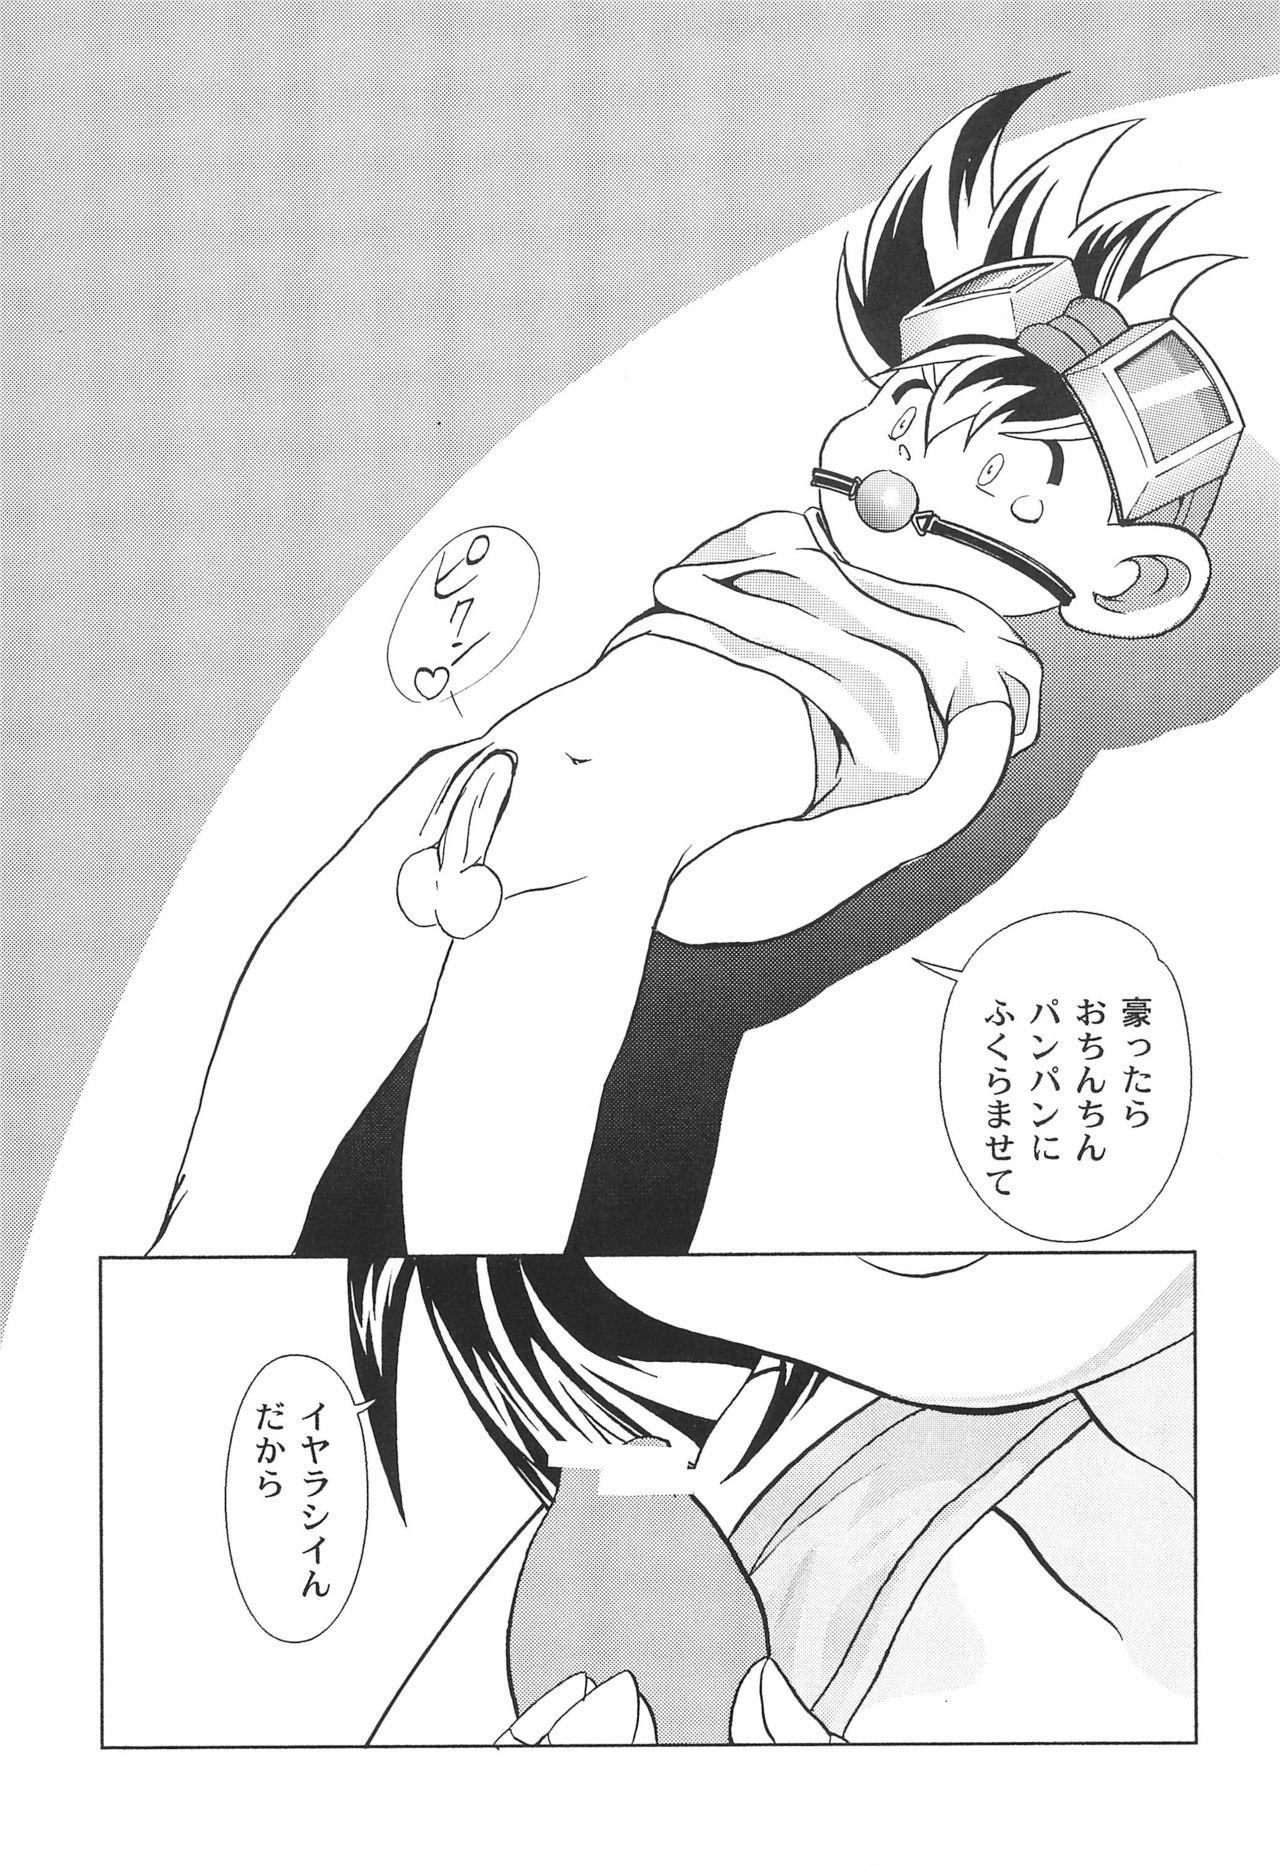 Domination Gokuraku Tokkyuu AMINO - Bakusou kyoudai lets and go Orgy - Page 7